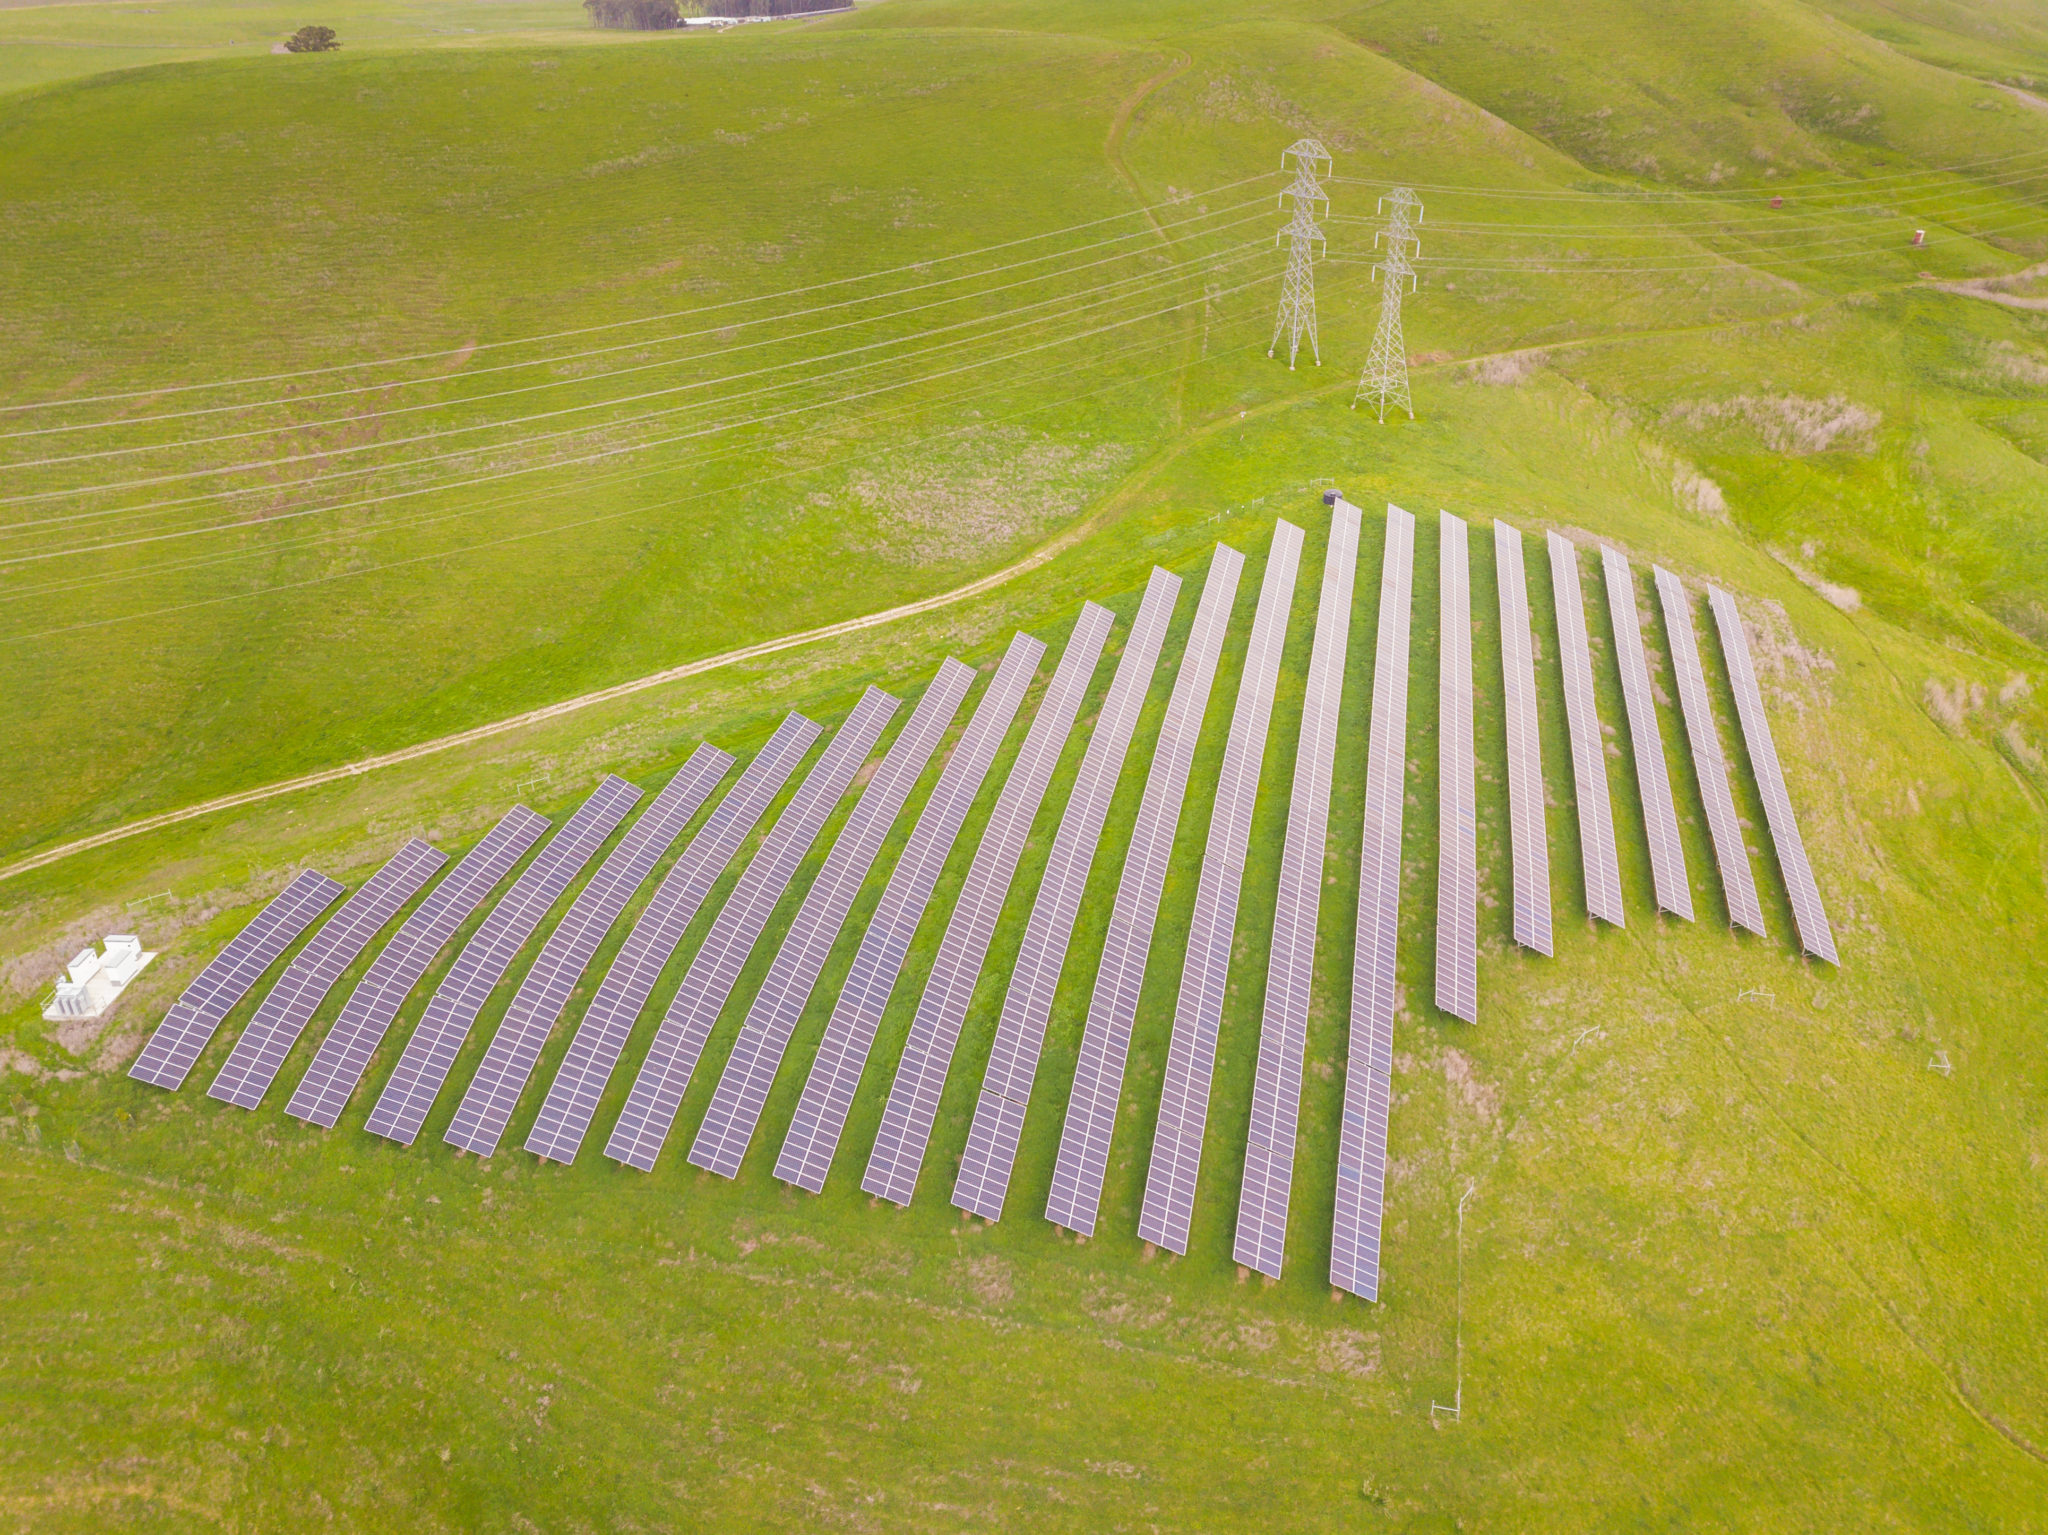 Aerial view of a solar farm among green rolling hills in Petaluma, California.